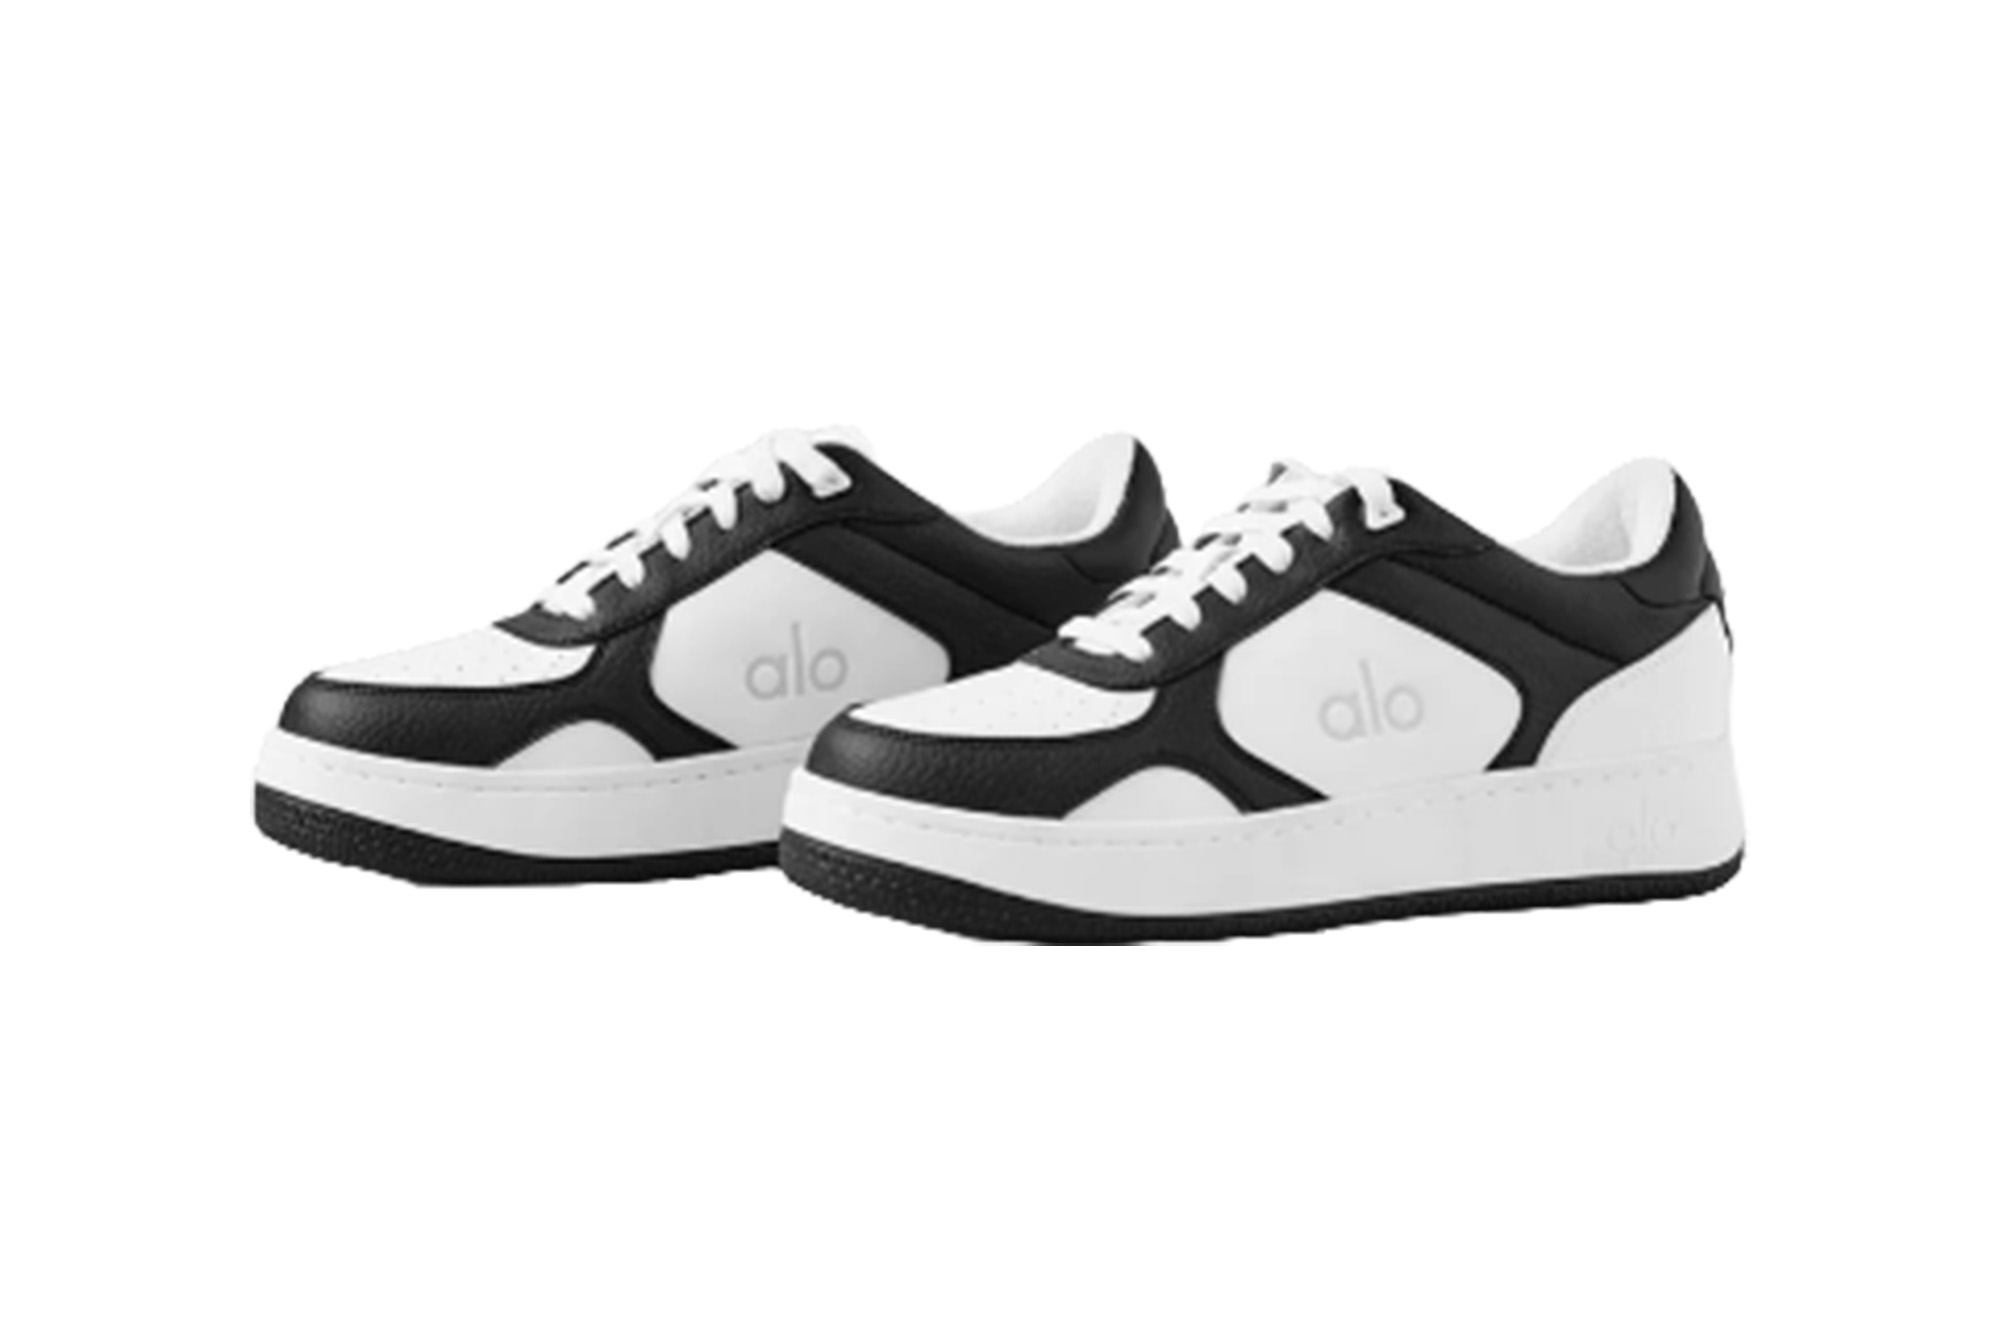 Schwarz-weiße Alo-Sneaker